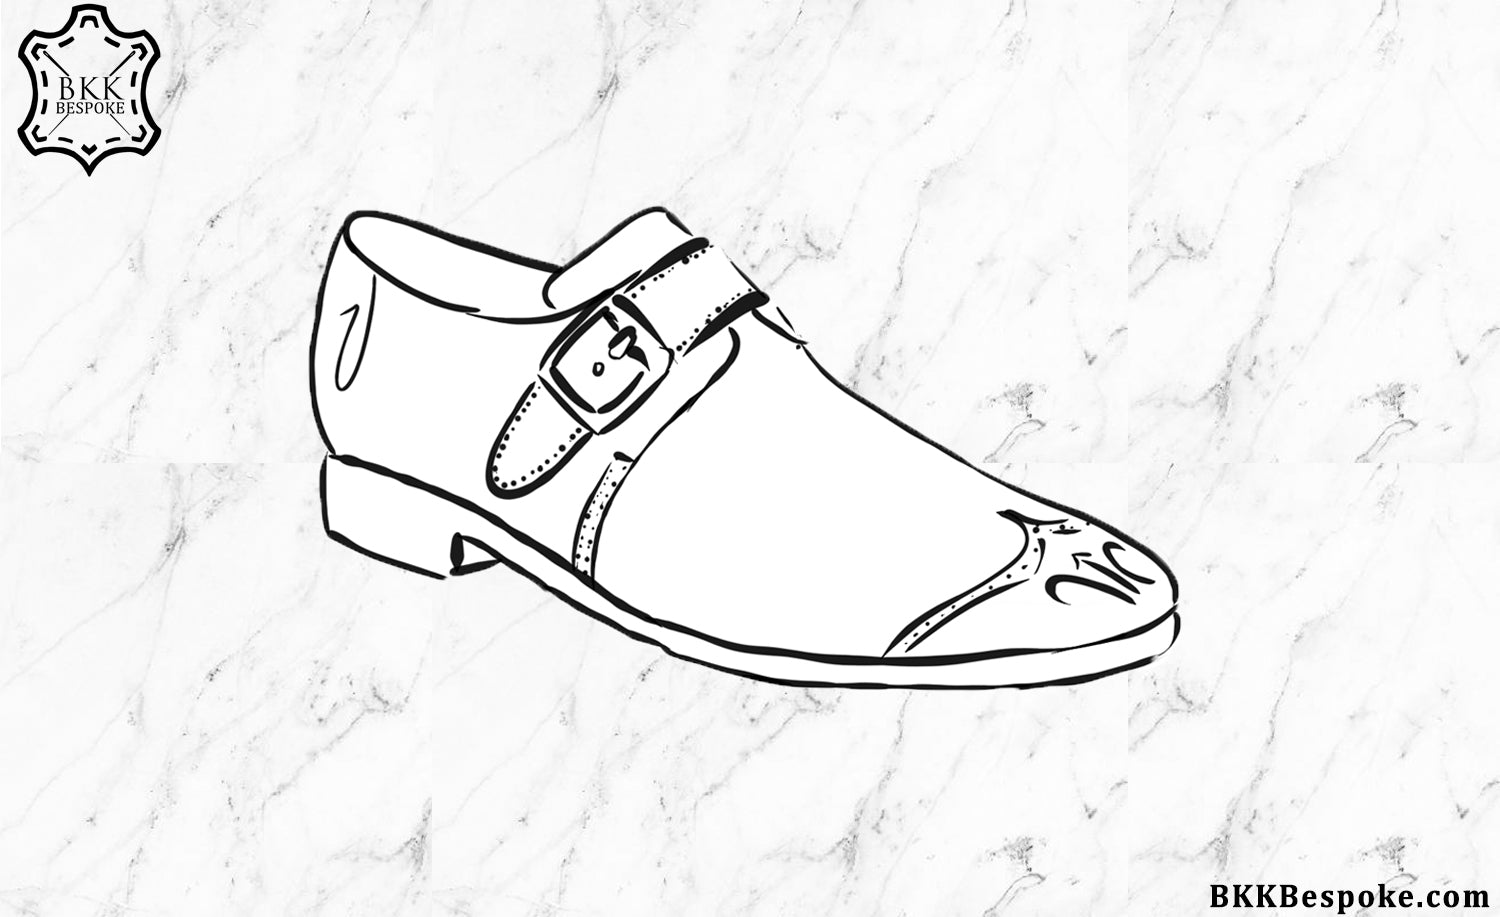 Arcobareno Bespoke Shoes